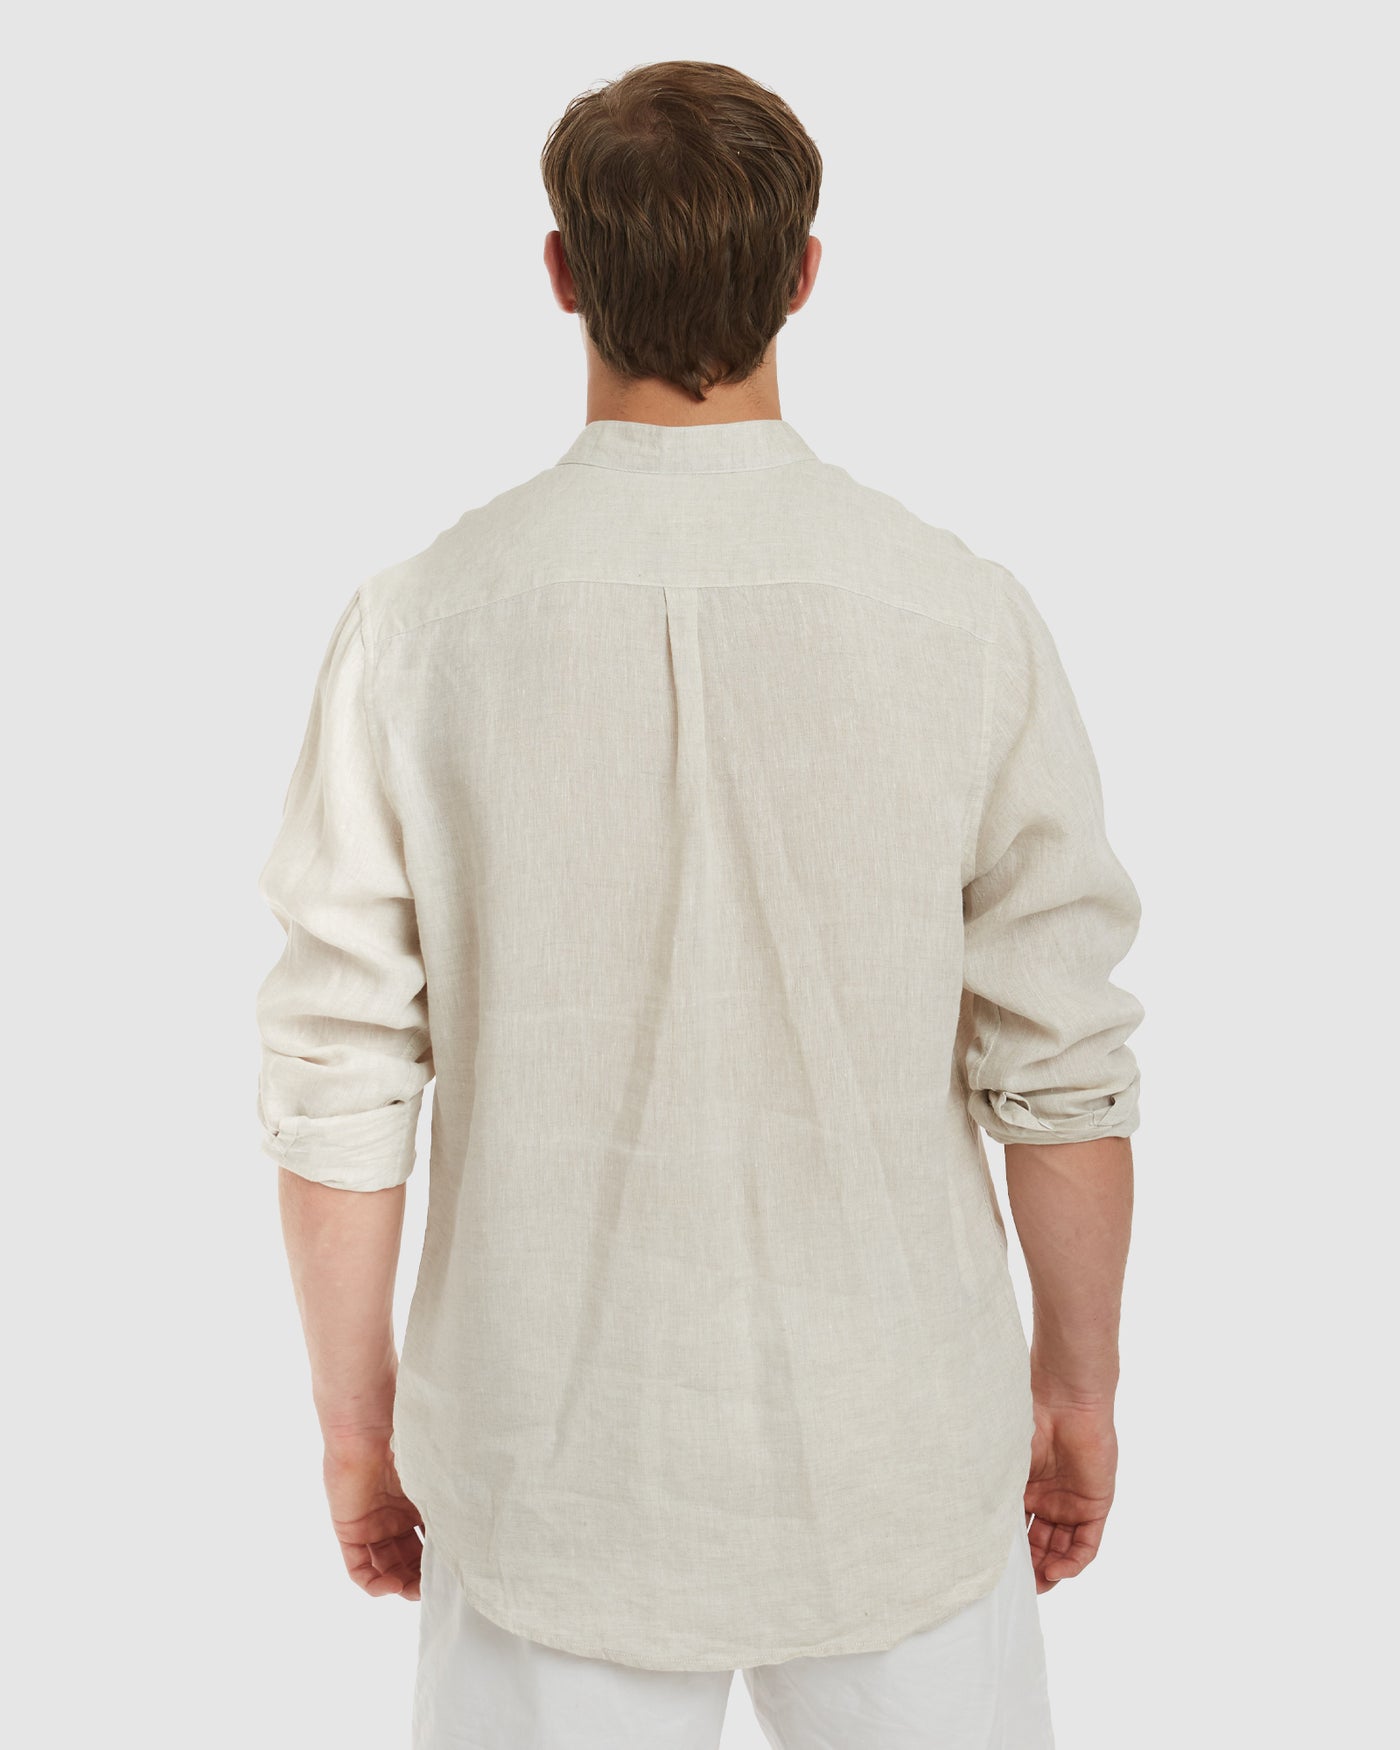 Palma Sand Mandarin Collar Linen Shirt - Casual Fit